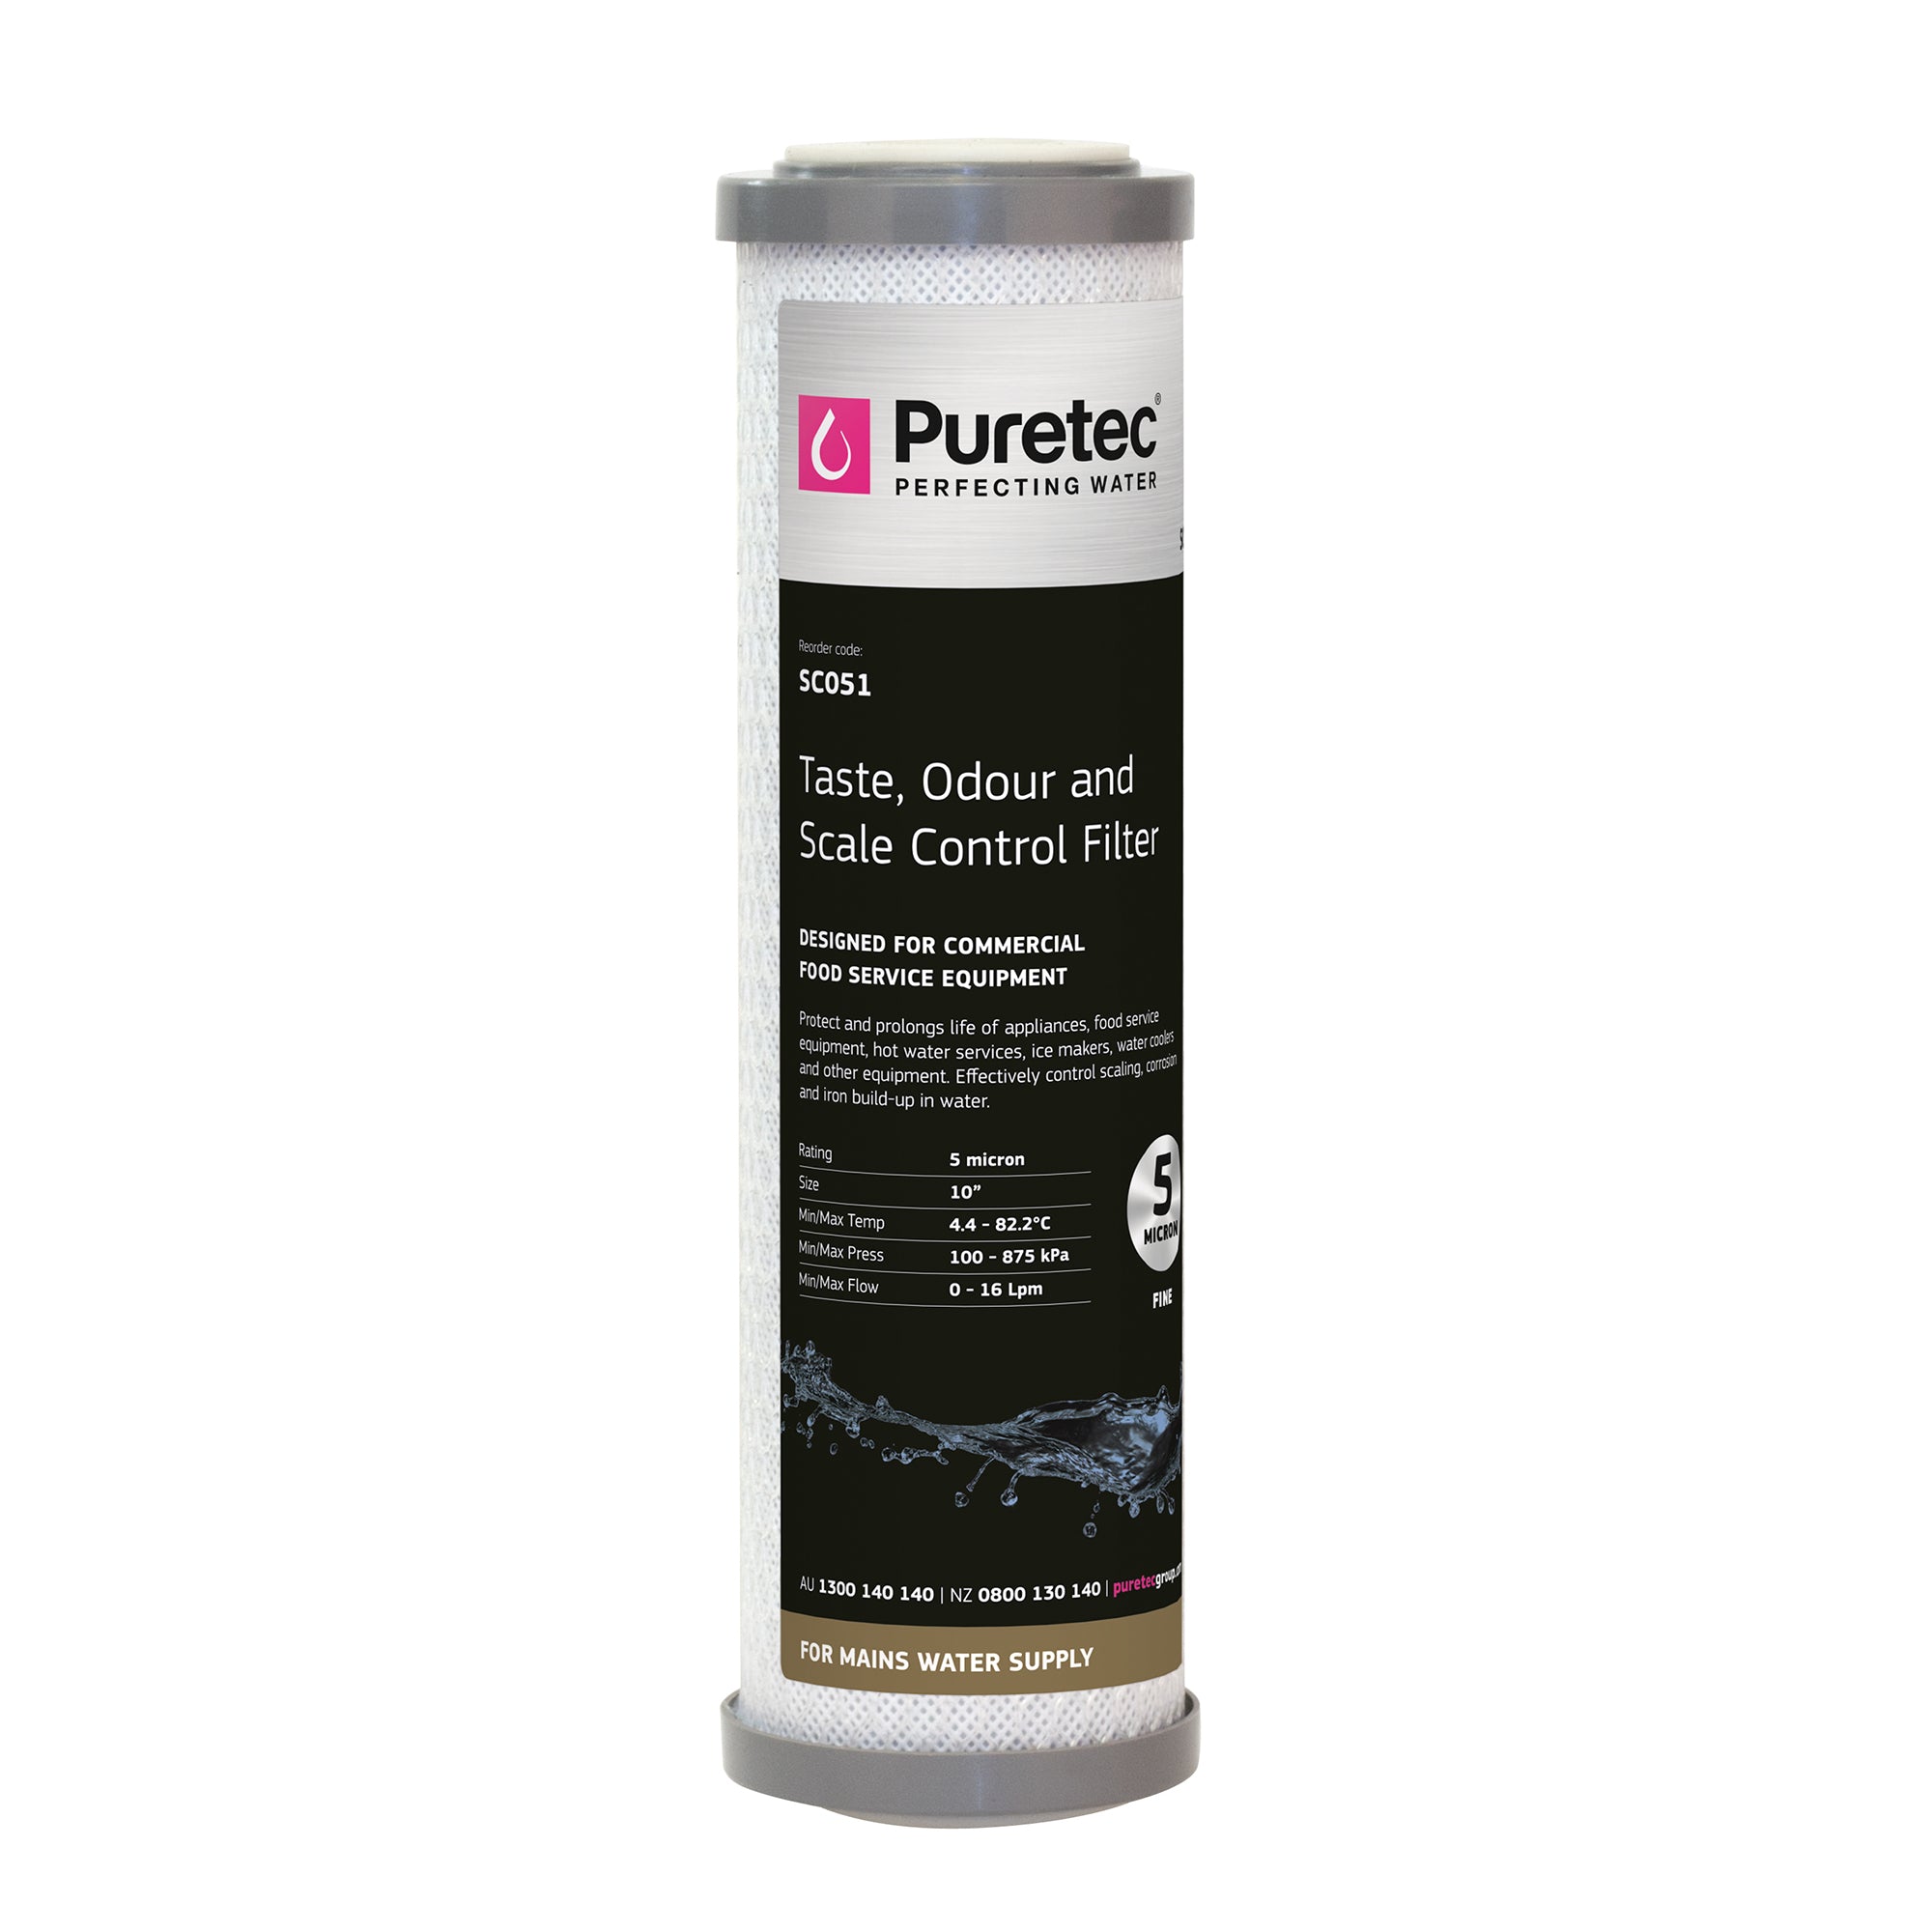 Puretec taste, odour and scale control water filter cartridge